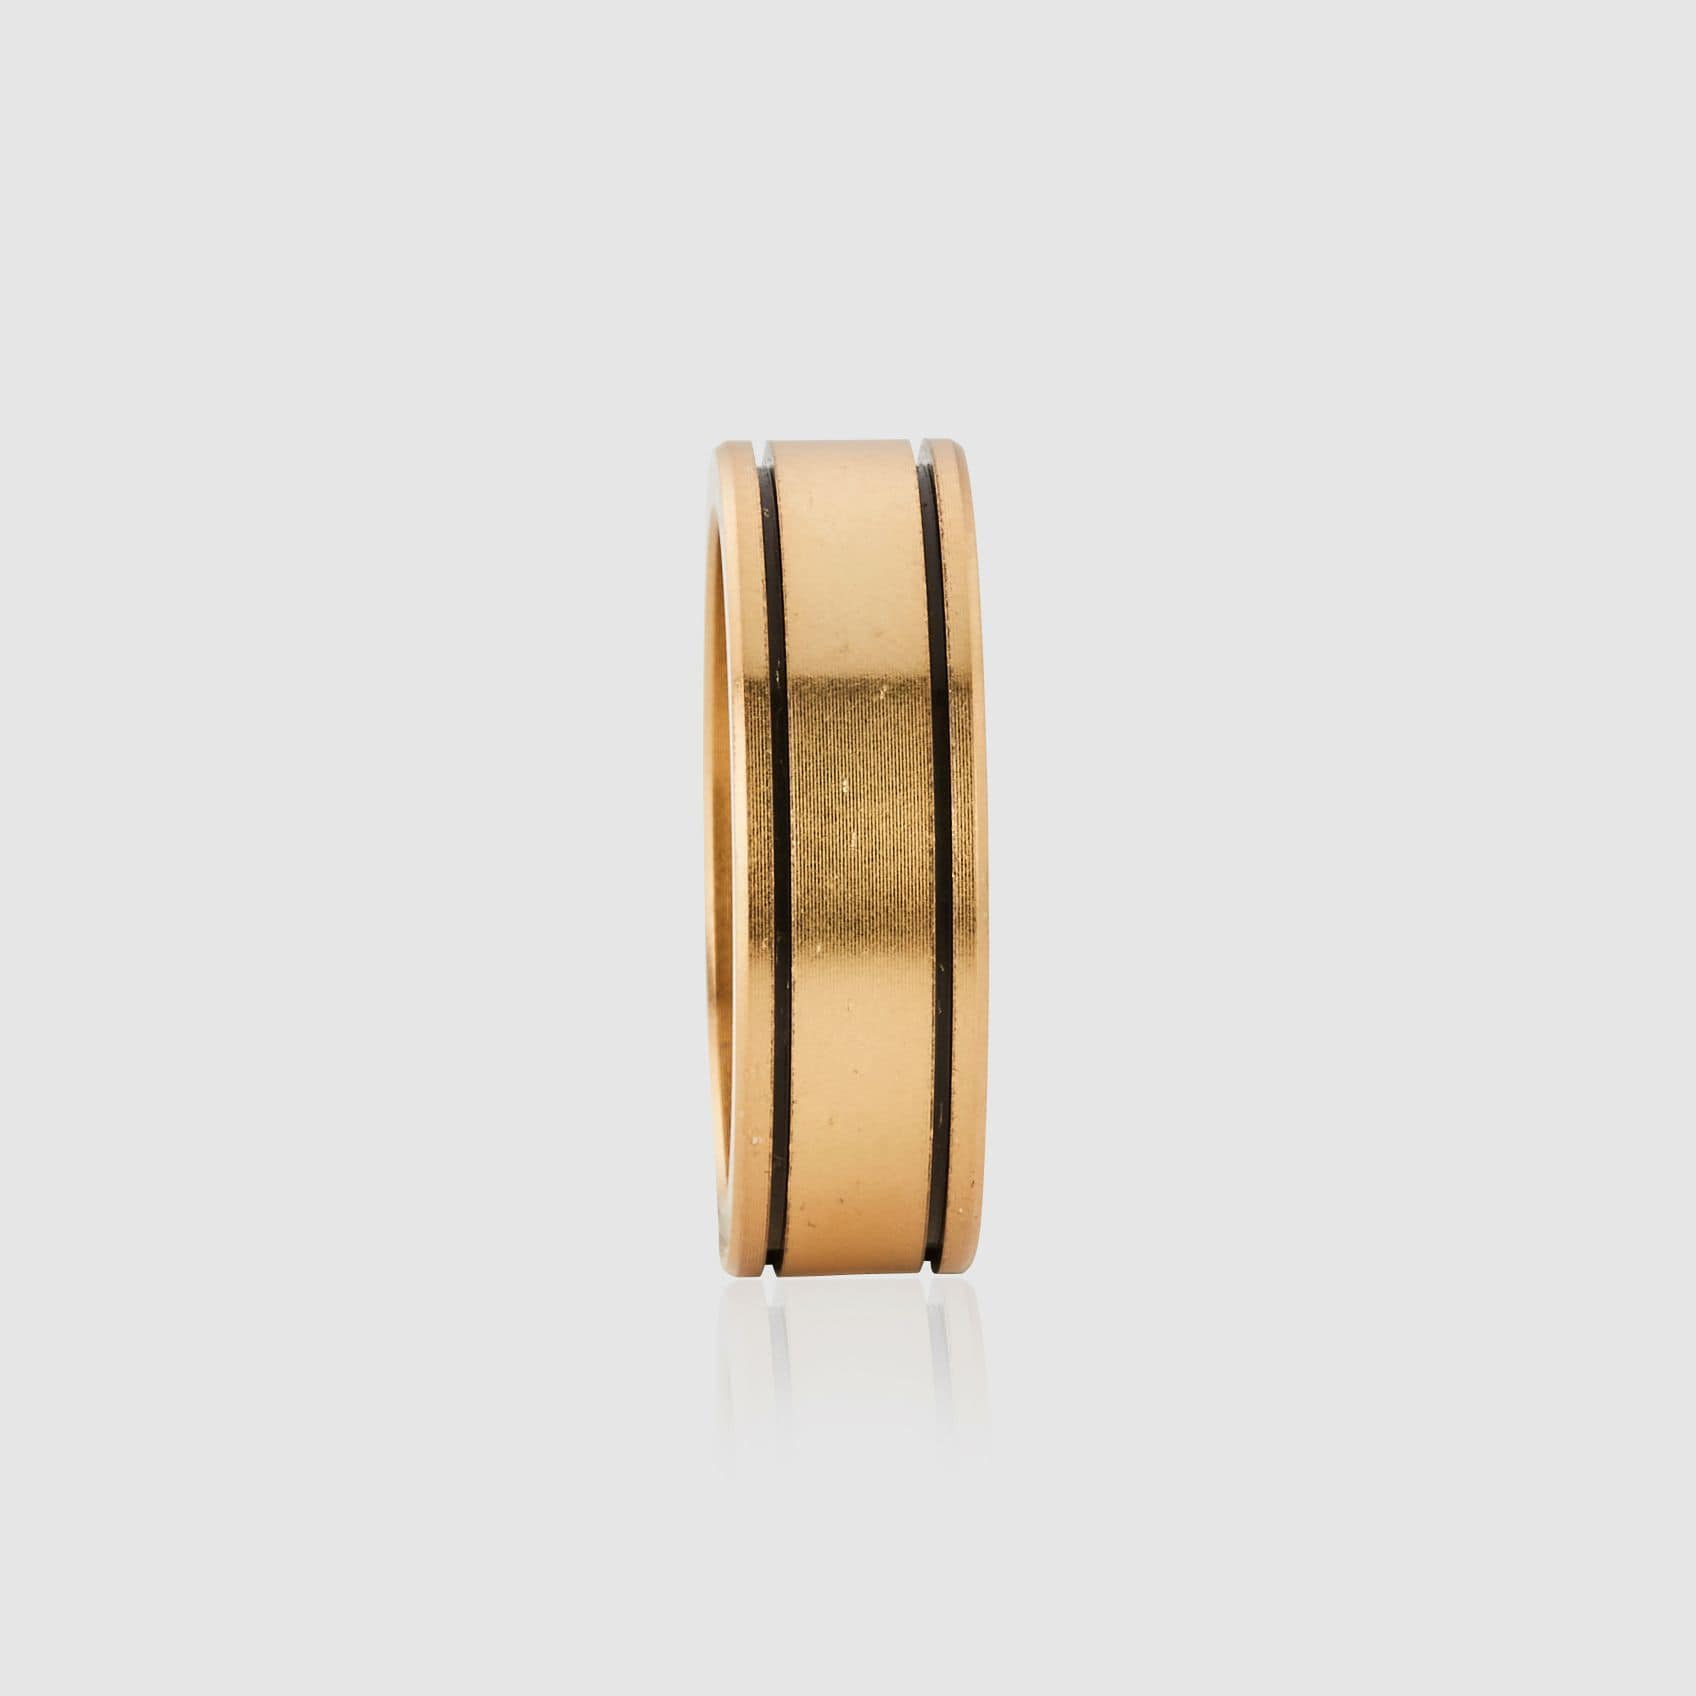 Band 2.0 Ring (Gold)